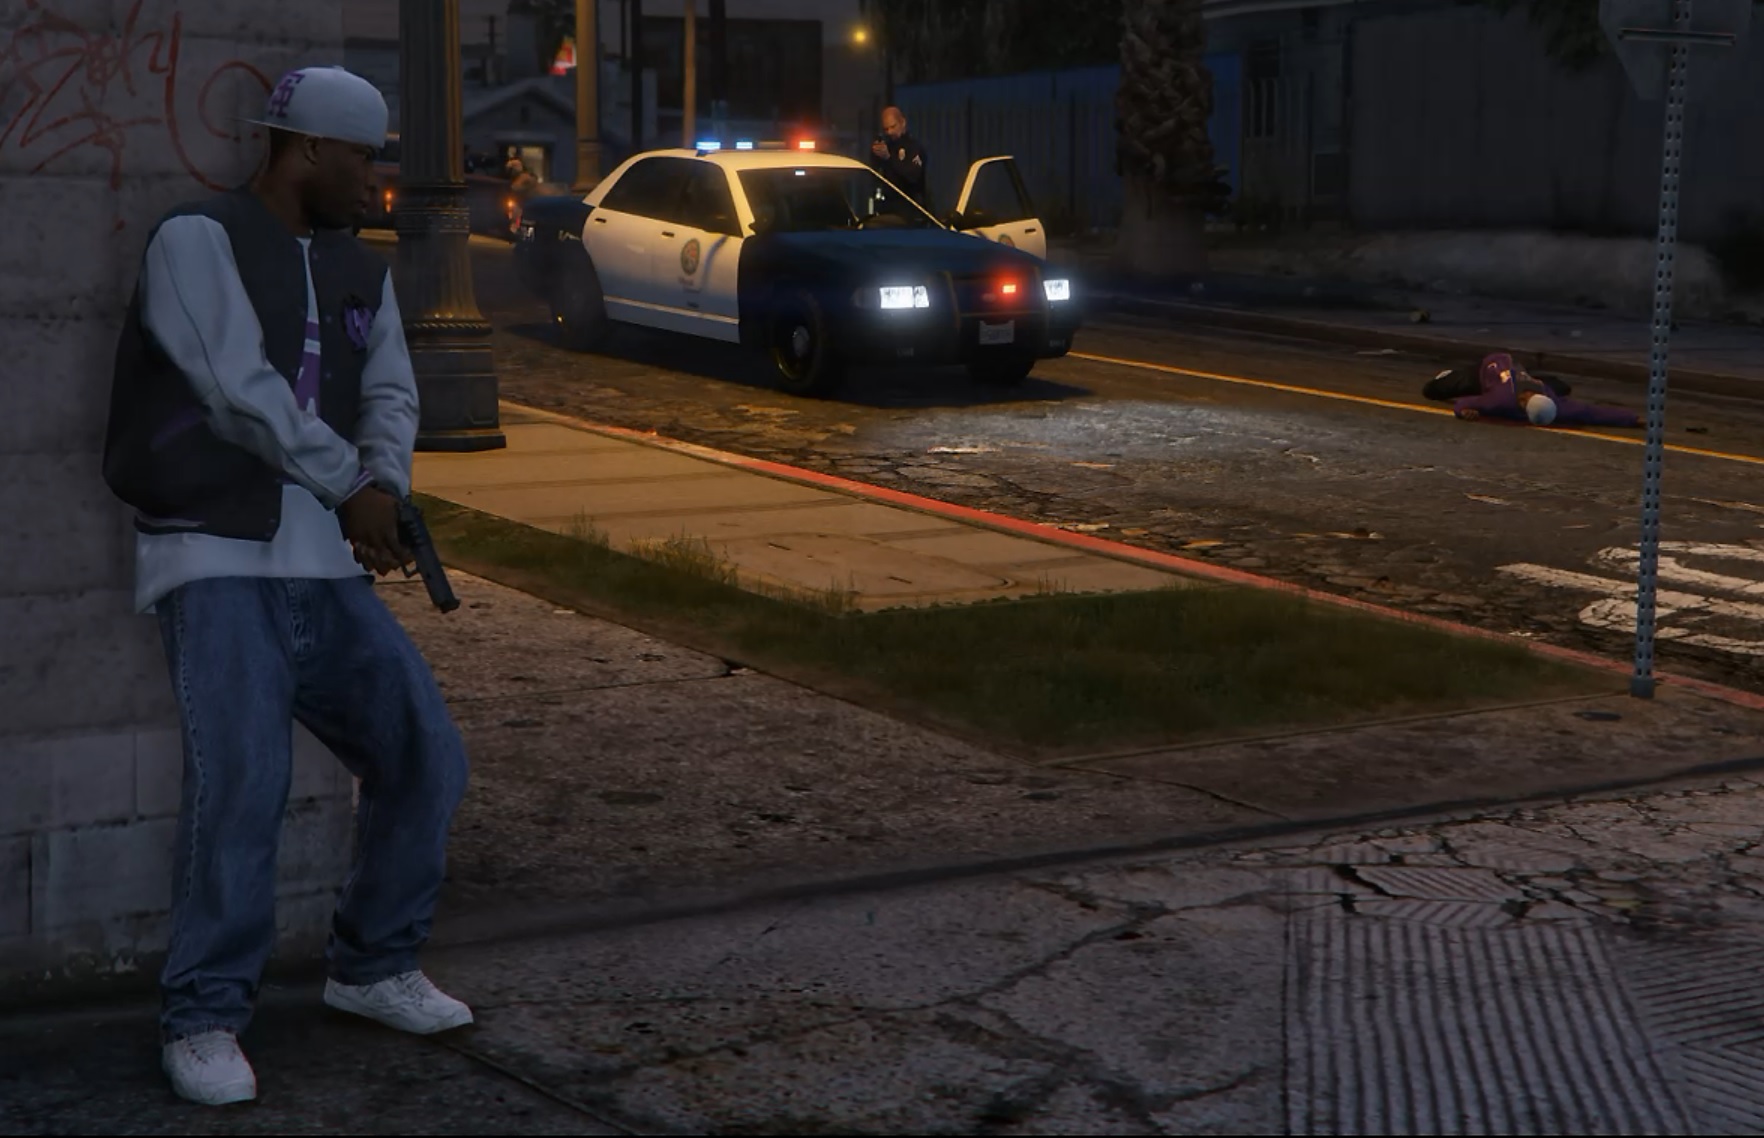 patrolling police   gang activity